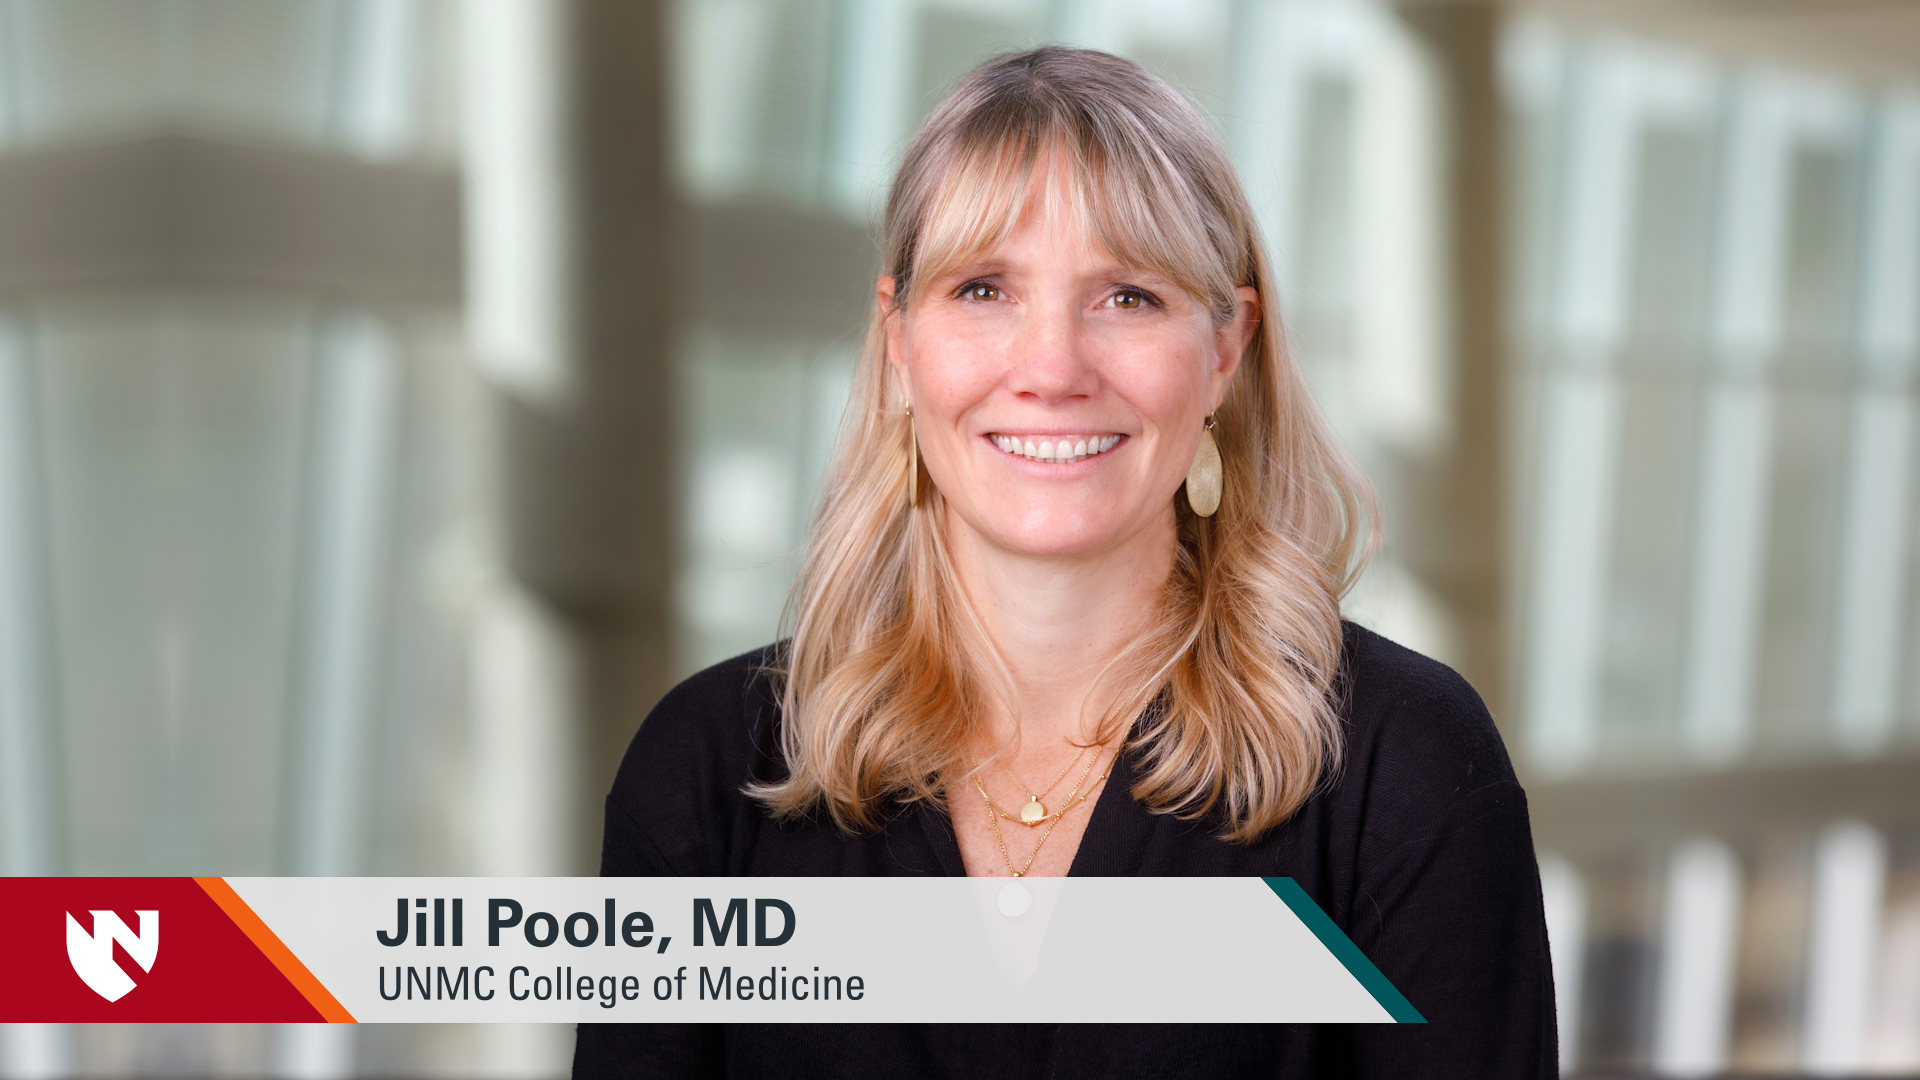 ASK UNMC! Jill Poole, MD, UNMC College of Medicine